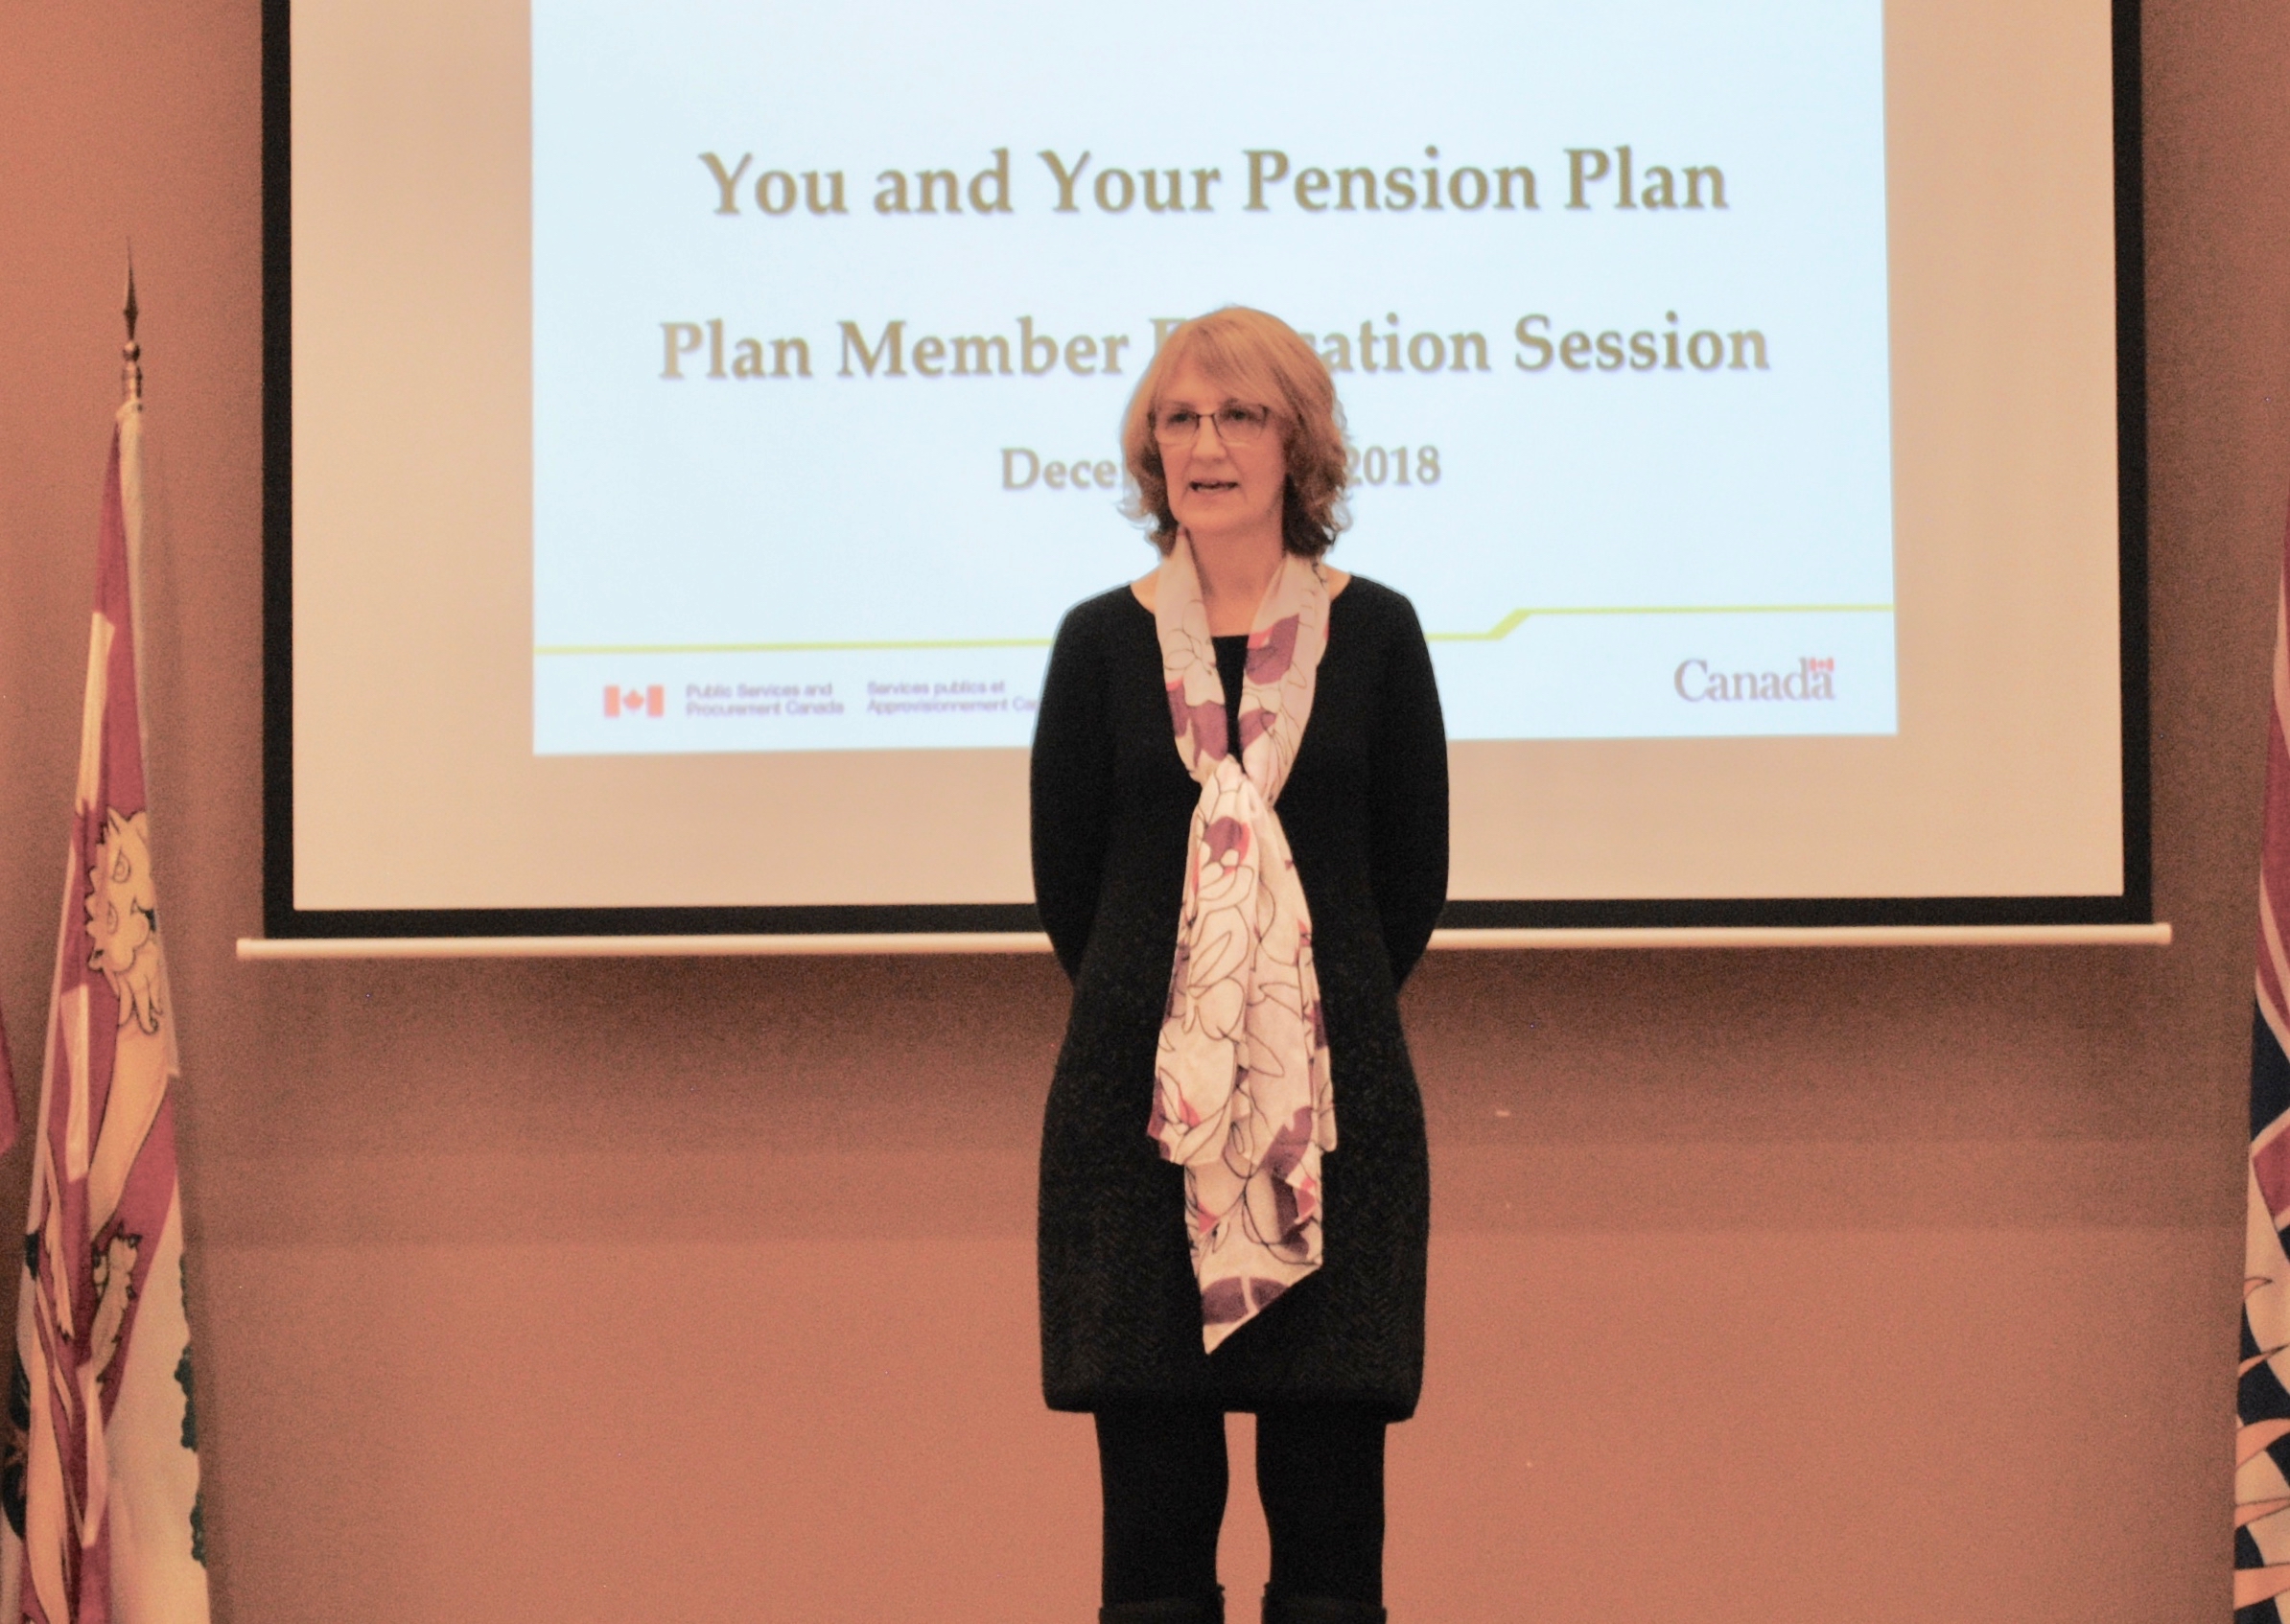 Melody Walz, Presenter for the Pubic Service Pension Plan